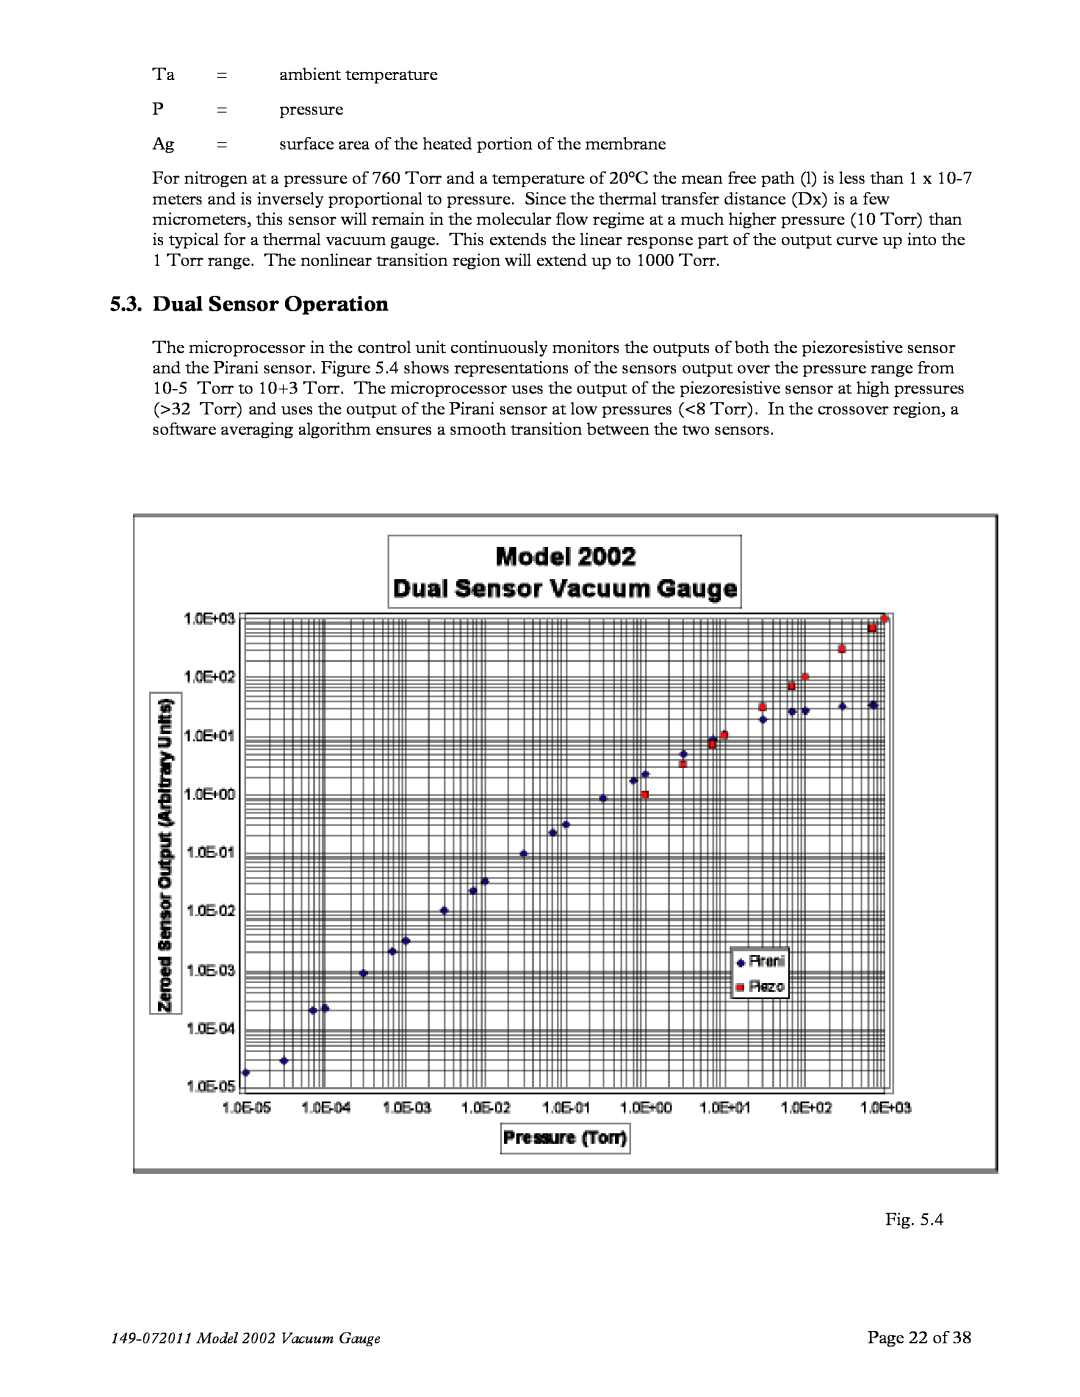 Teledyne 2002 instruction manual Dual Sensor Operation, Page 22 of 